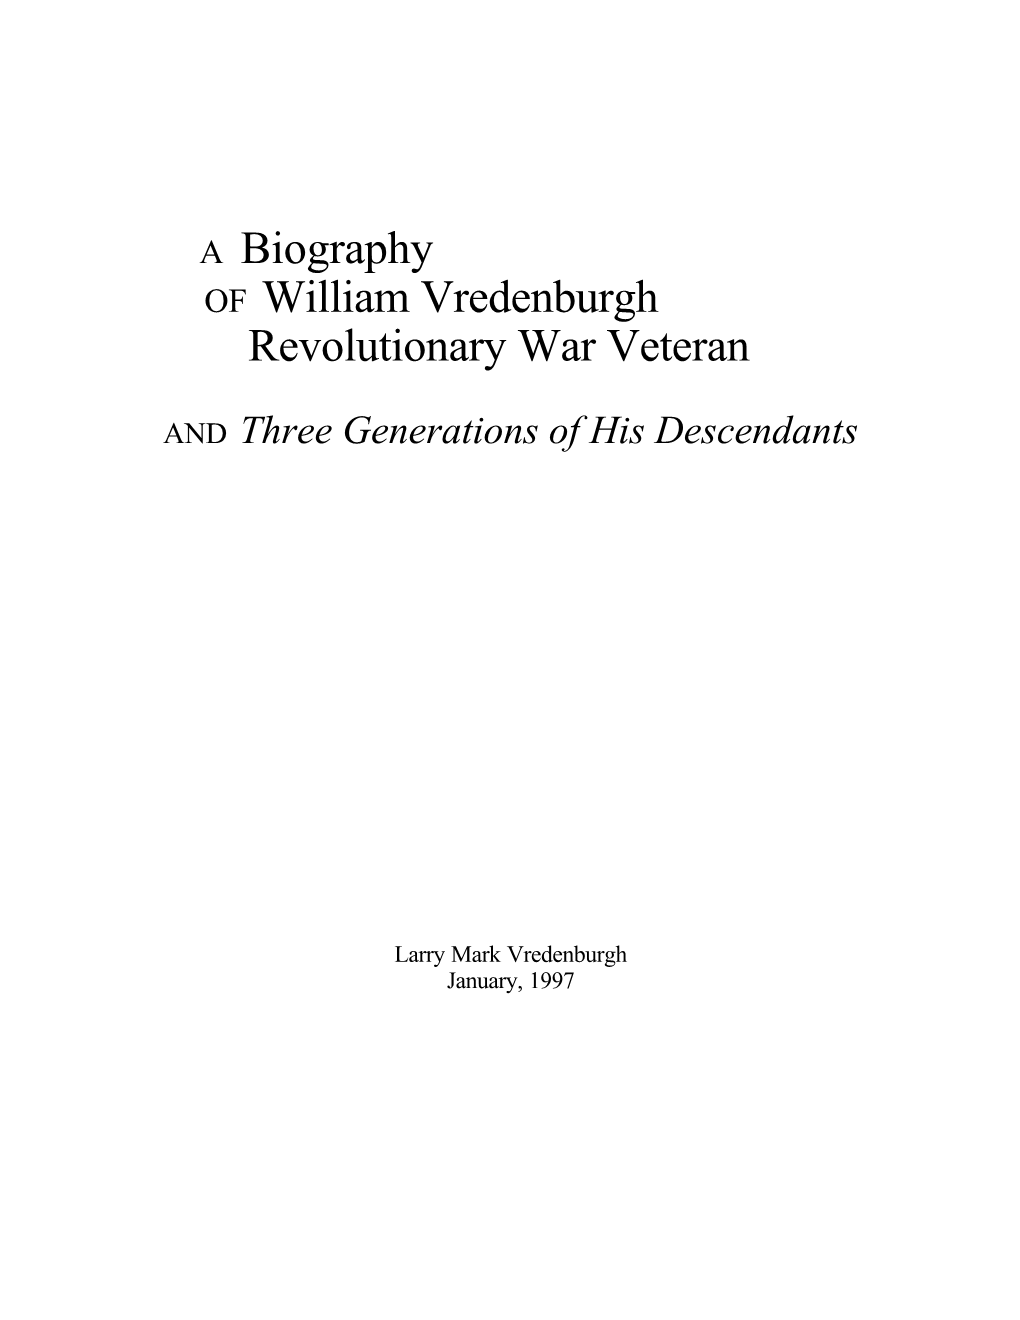 A Biography of William Vredenburgh Revolutionary War Veteran